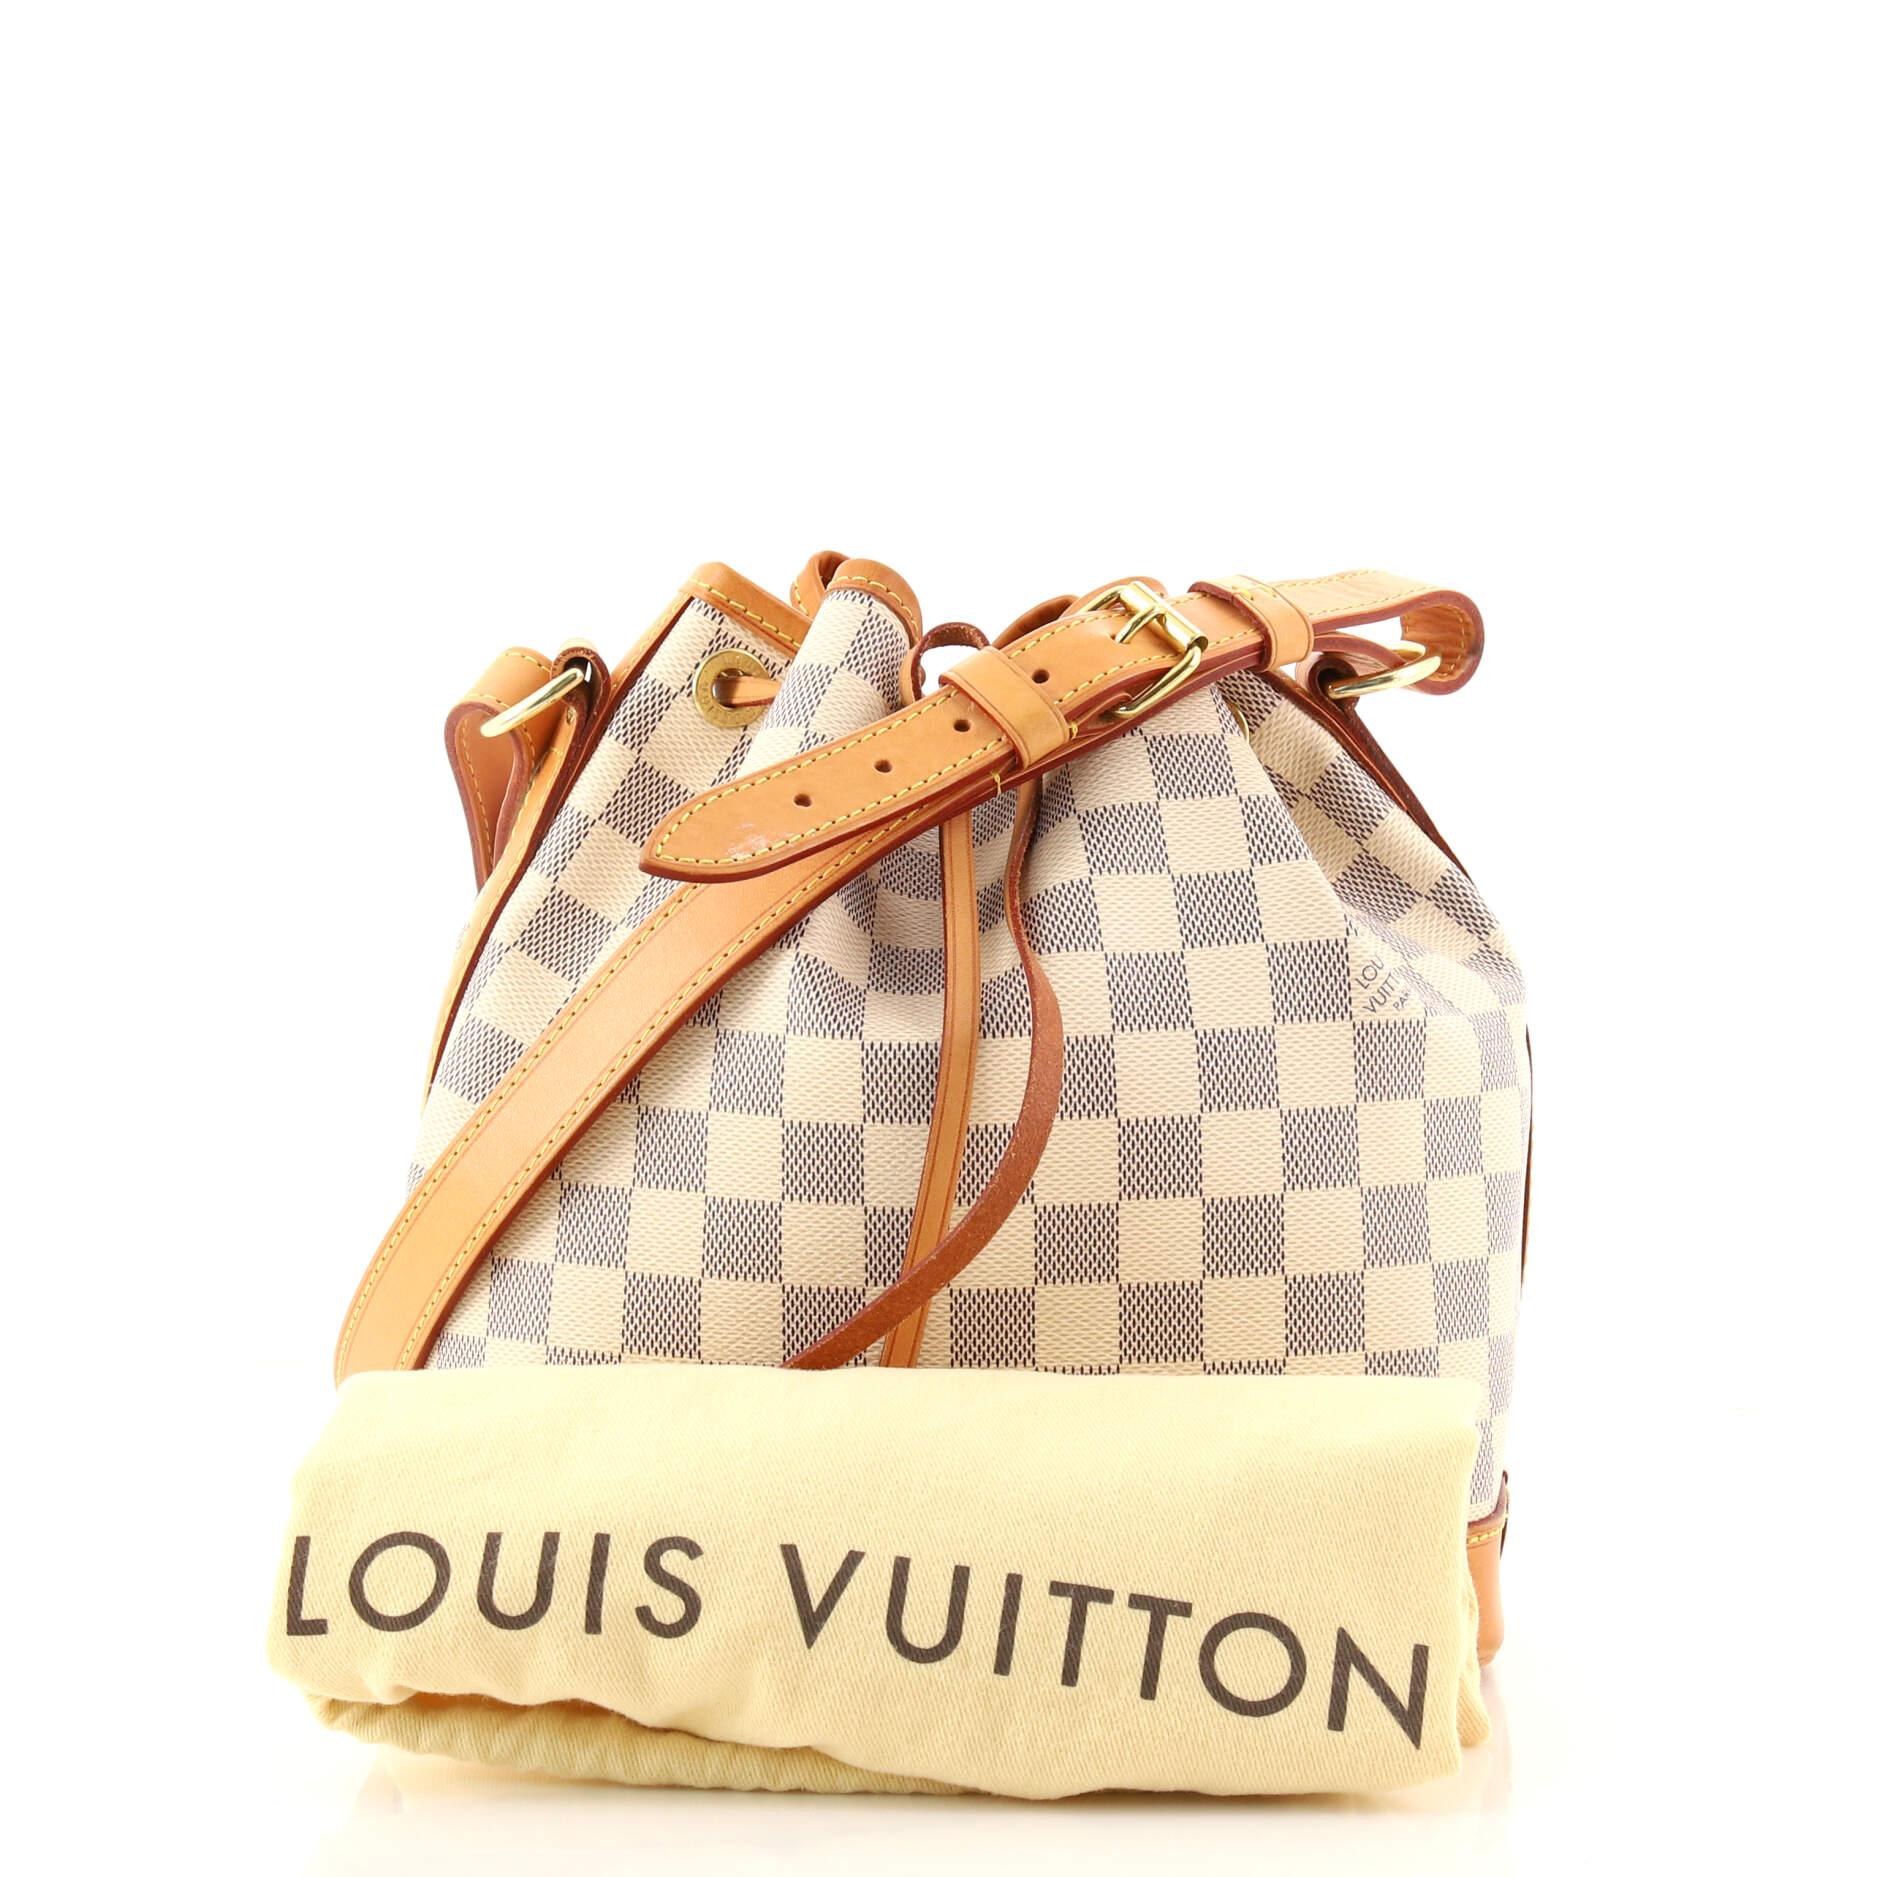 Louis Vuitton Noe Bb Epi - For Sale on 1stDibs